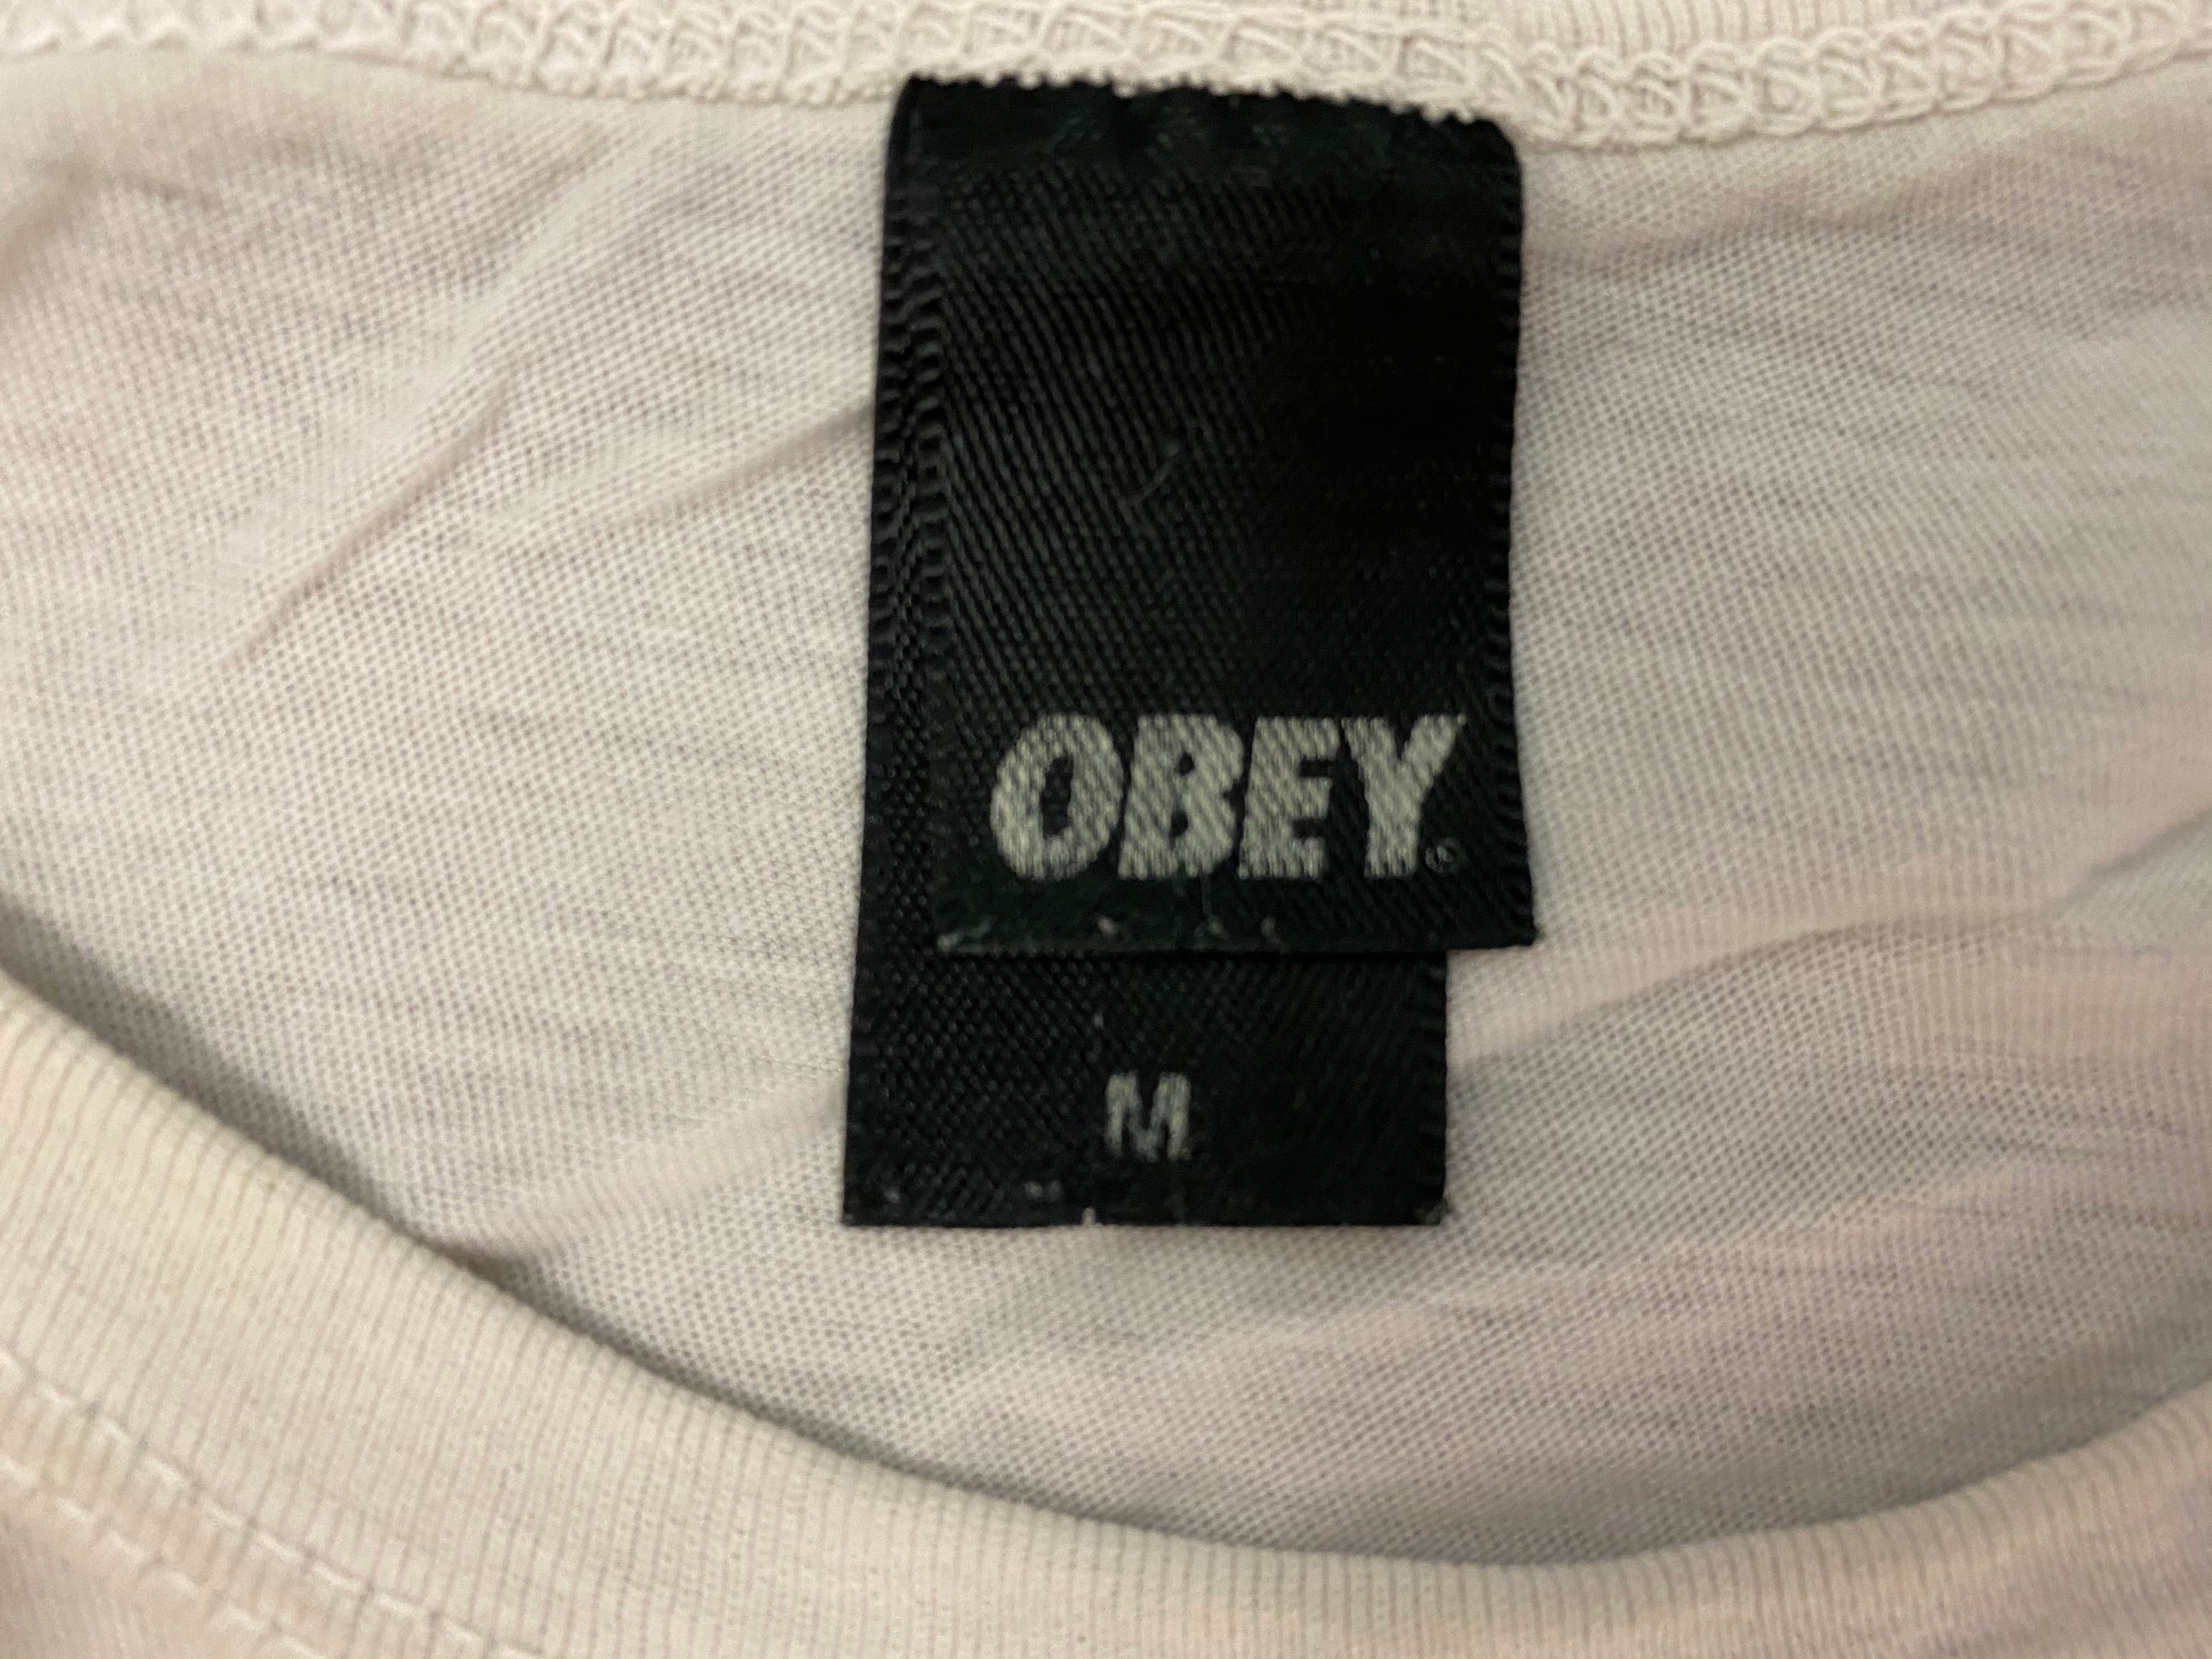 Obey Stacked Logo Tee - White